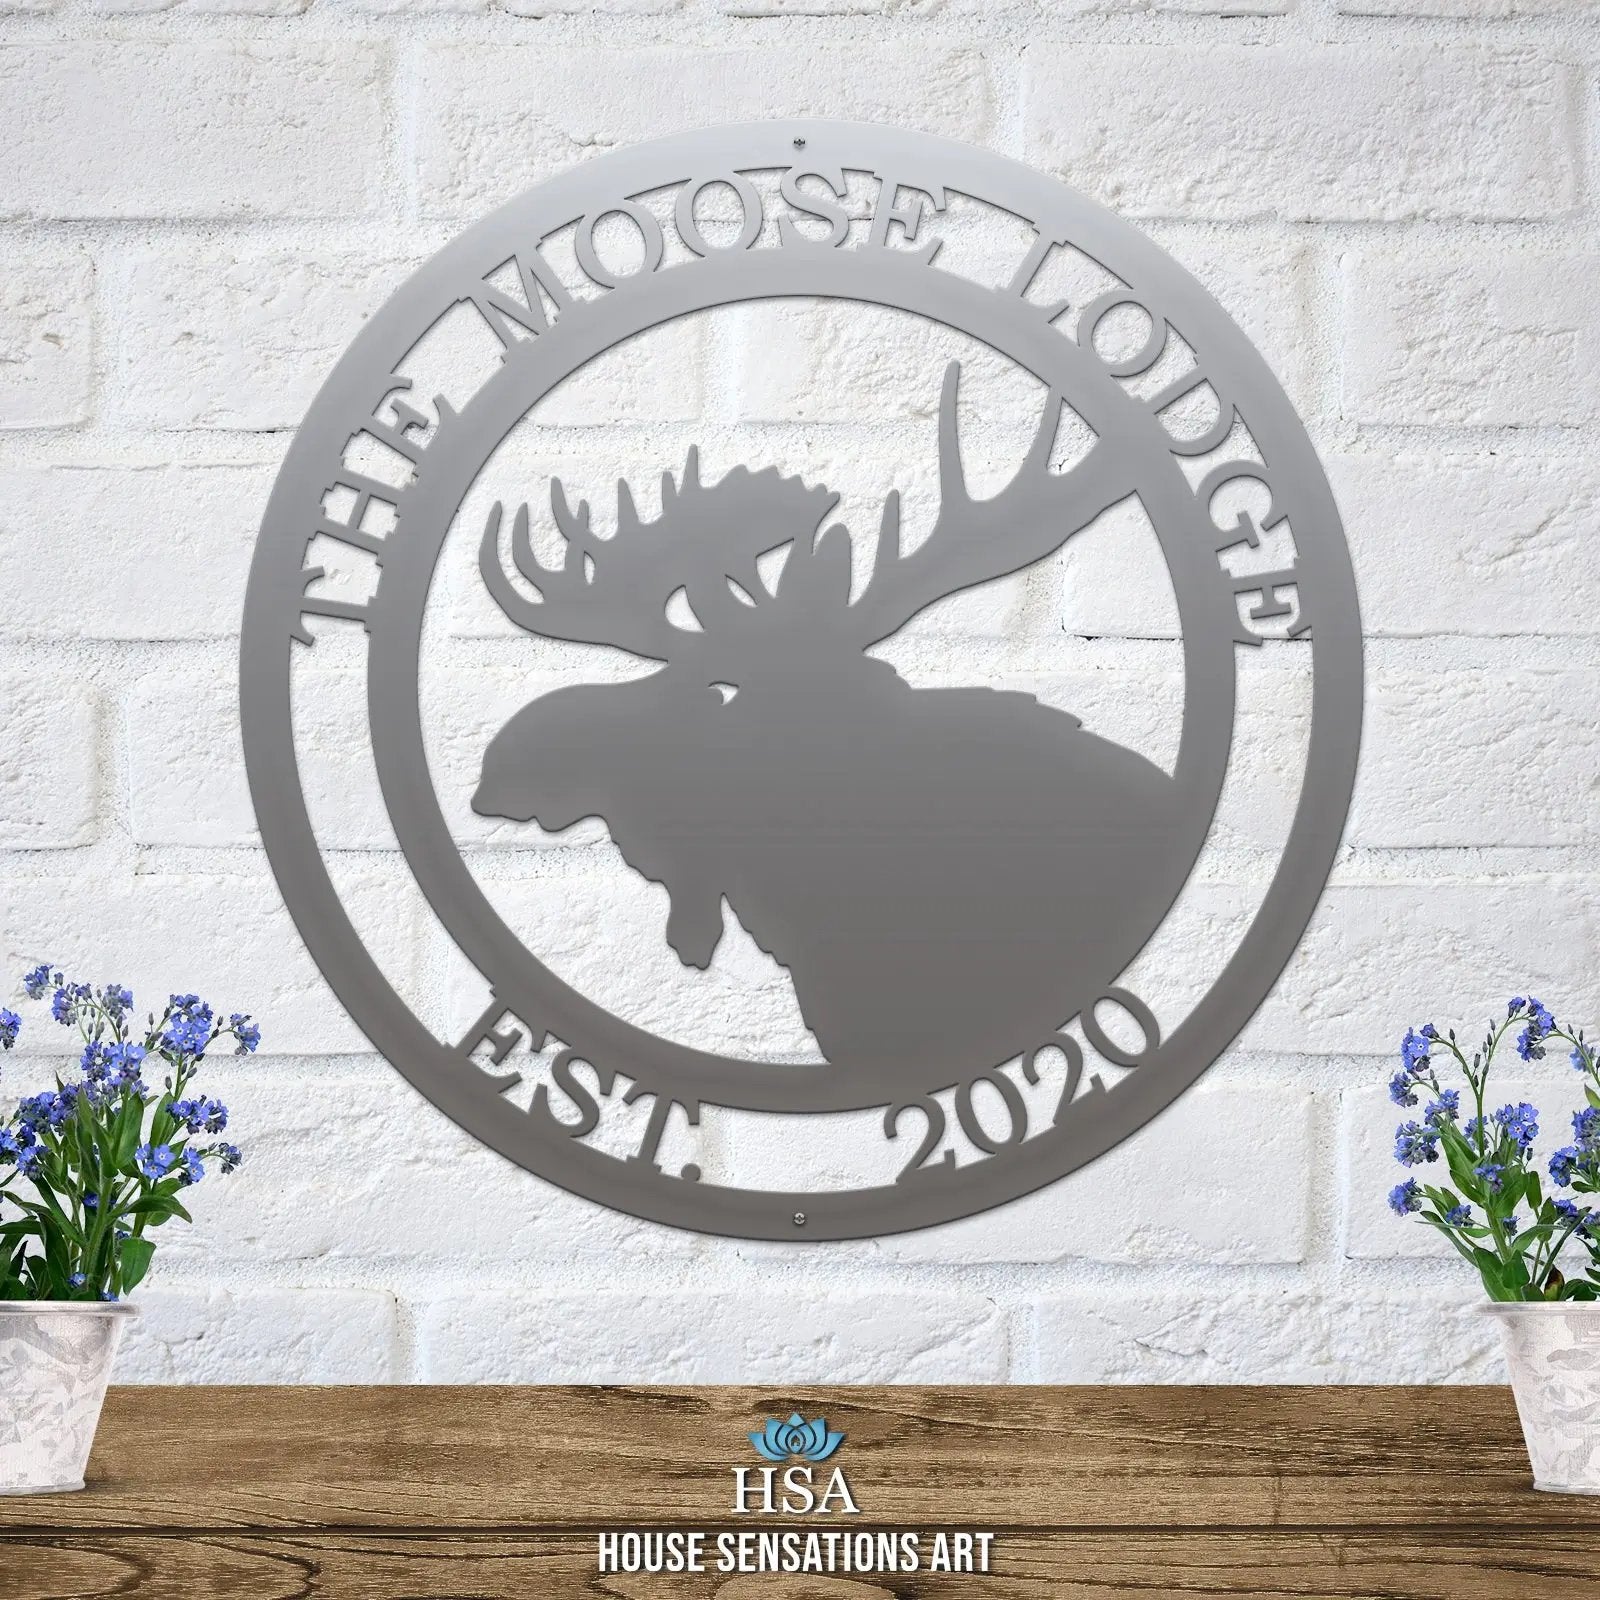 Personalized Moose Hunter Cabin Sign Cabin Sign House Sensations Art   